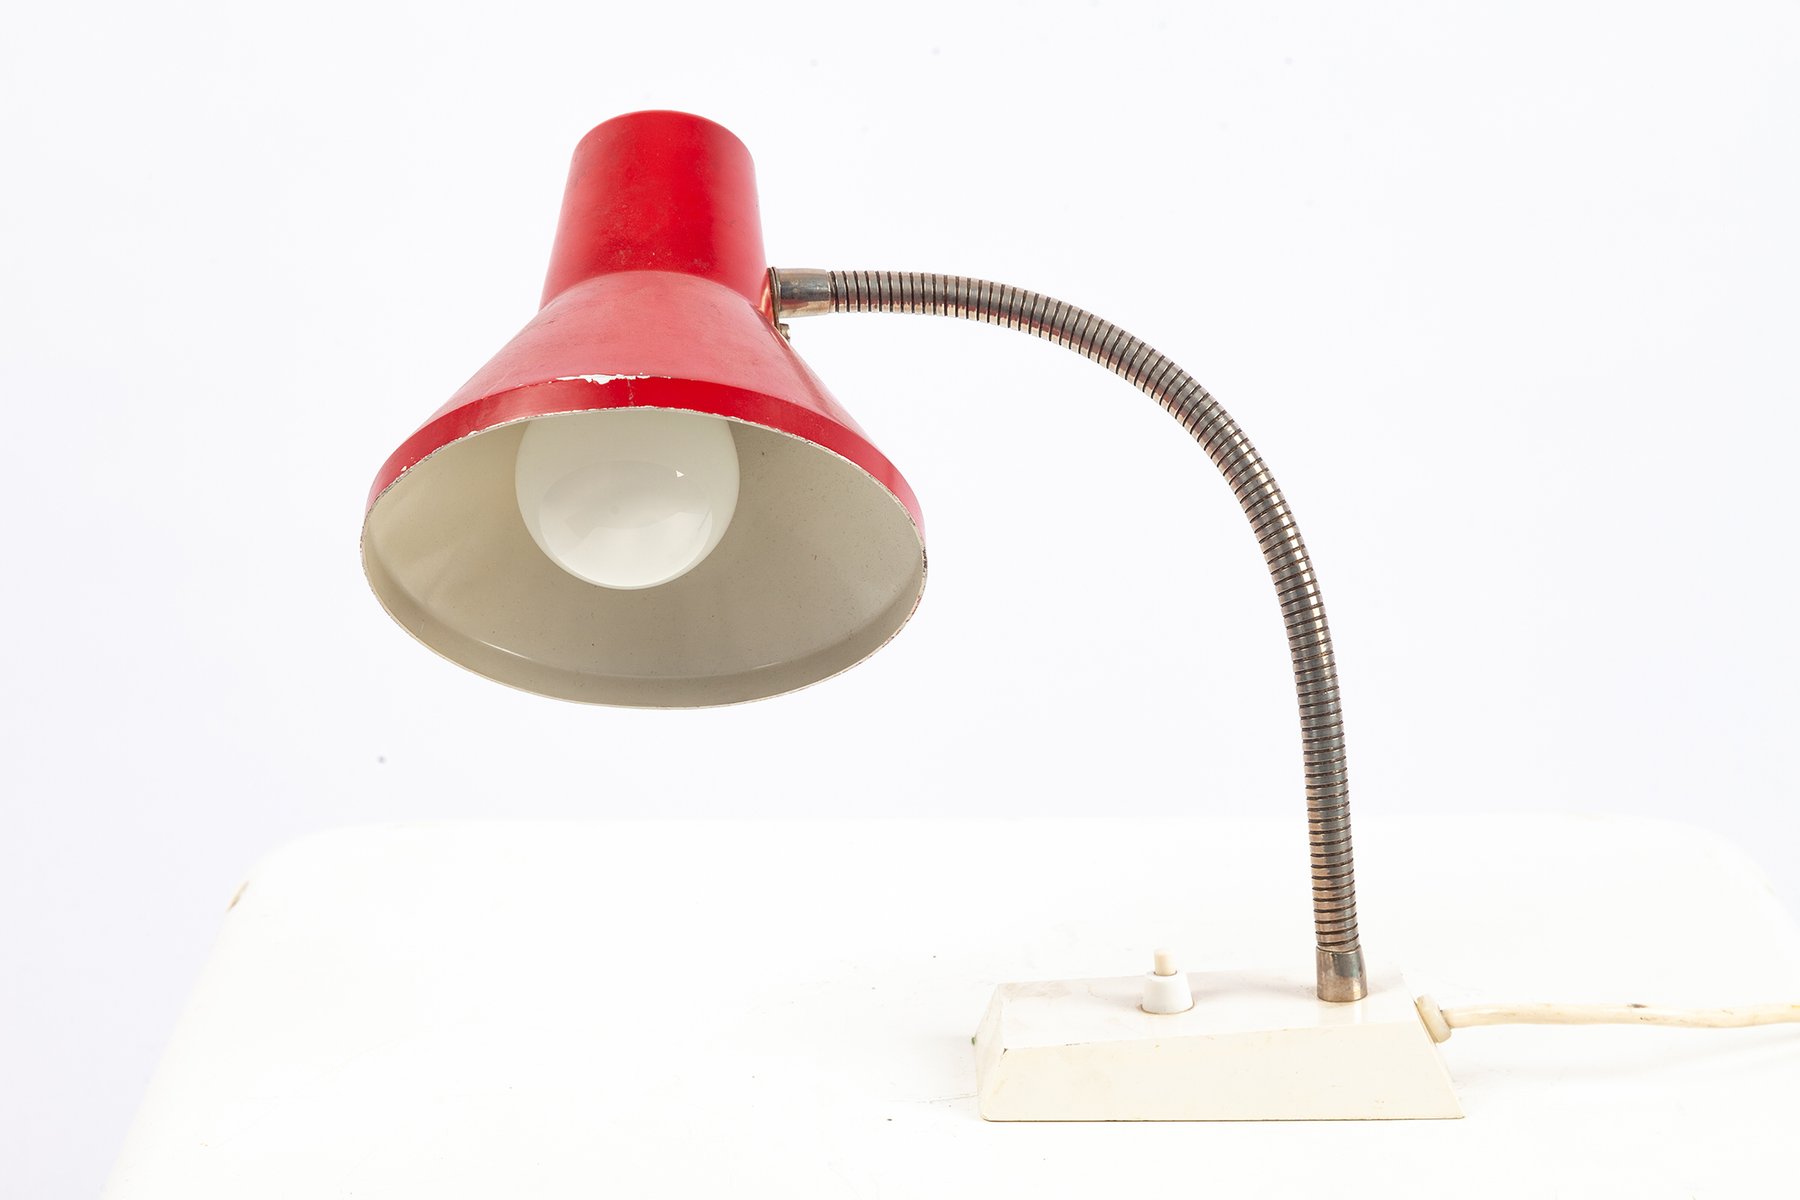 Rote Tischlampe aus Metall, 1950er